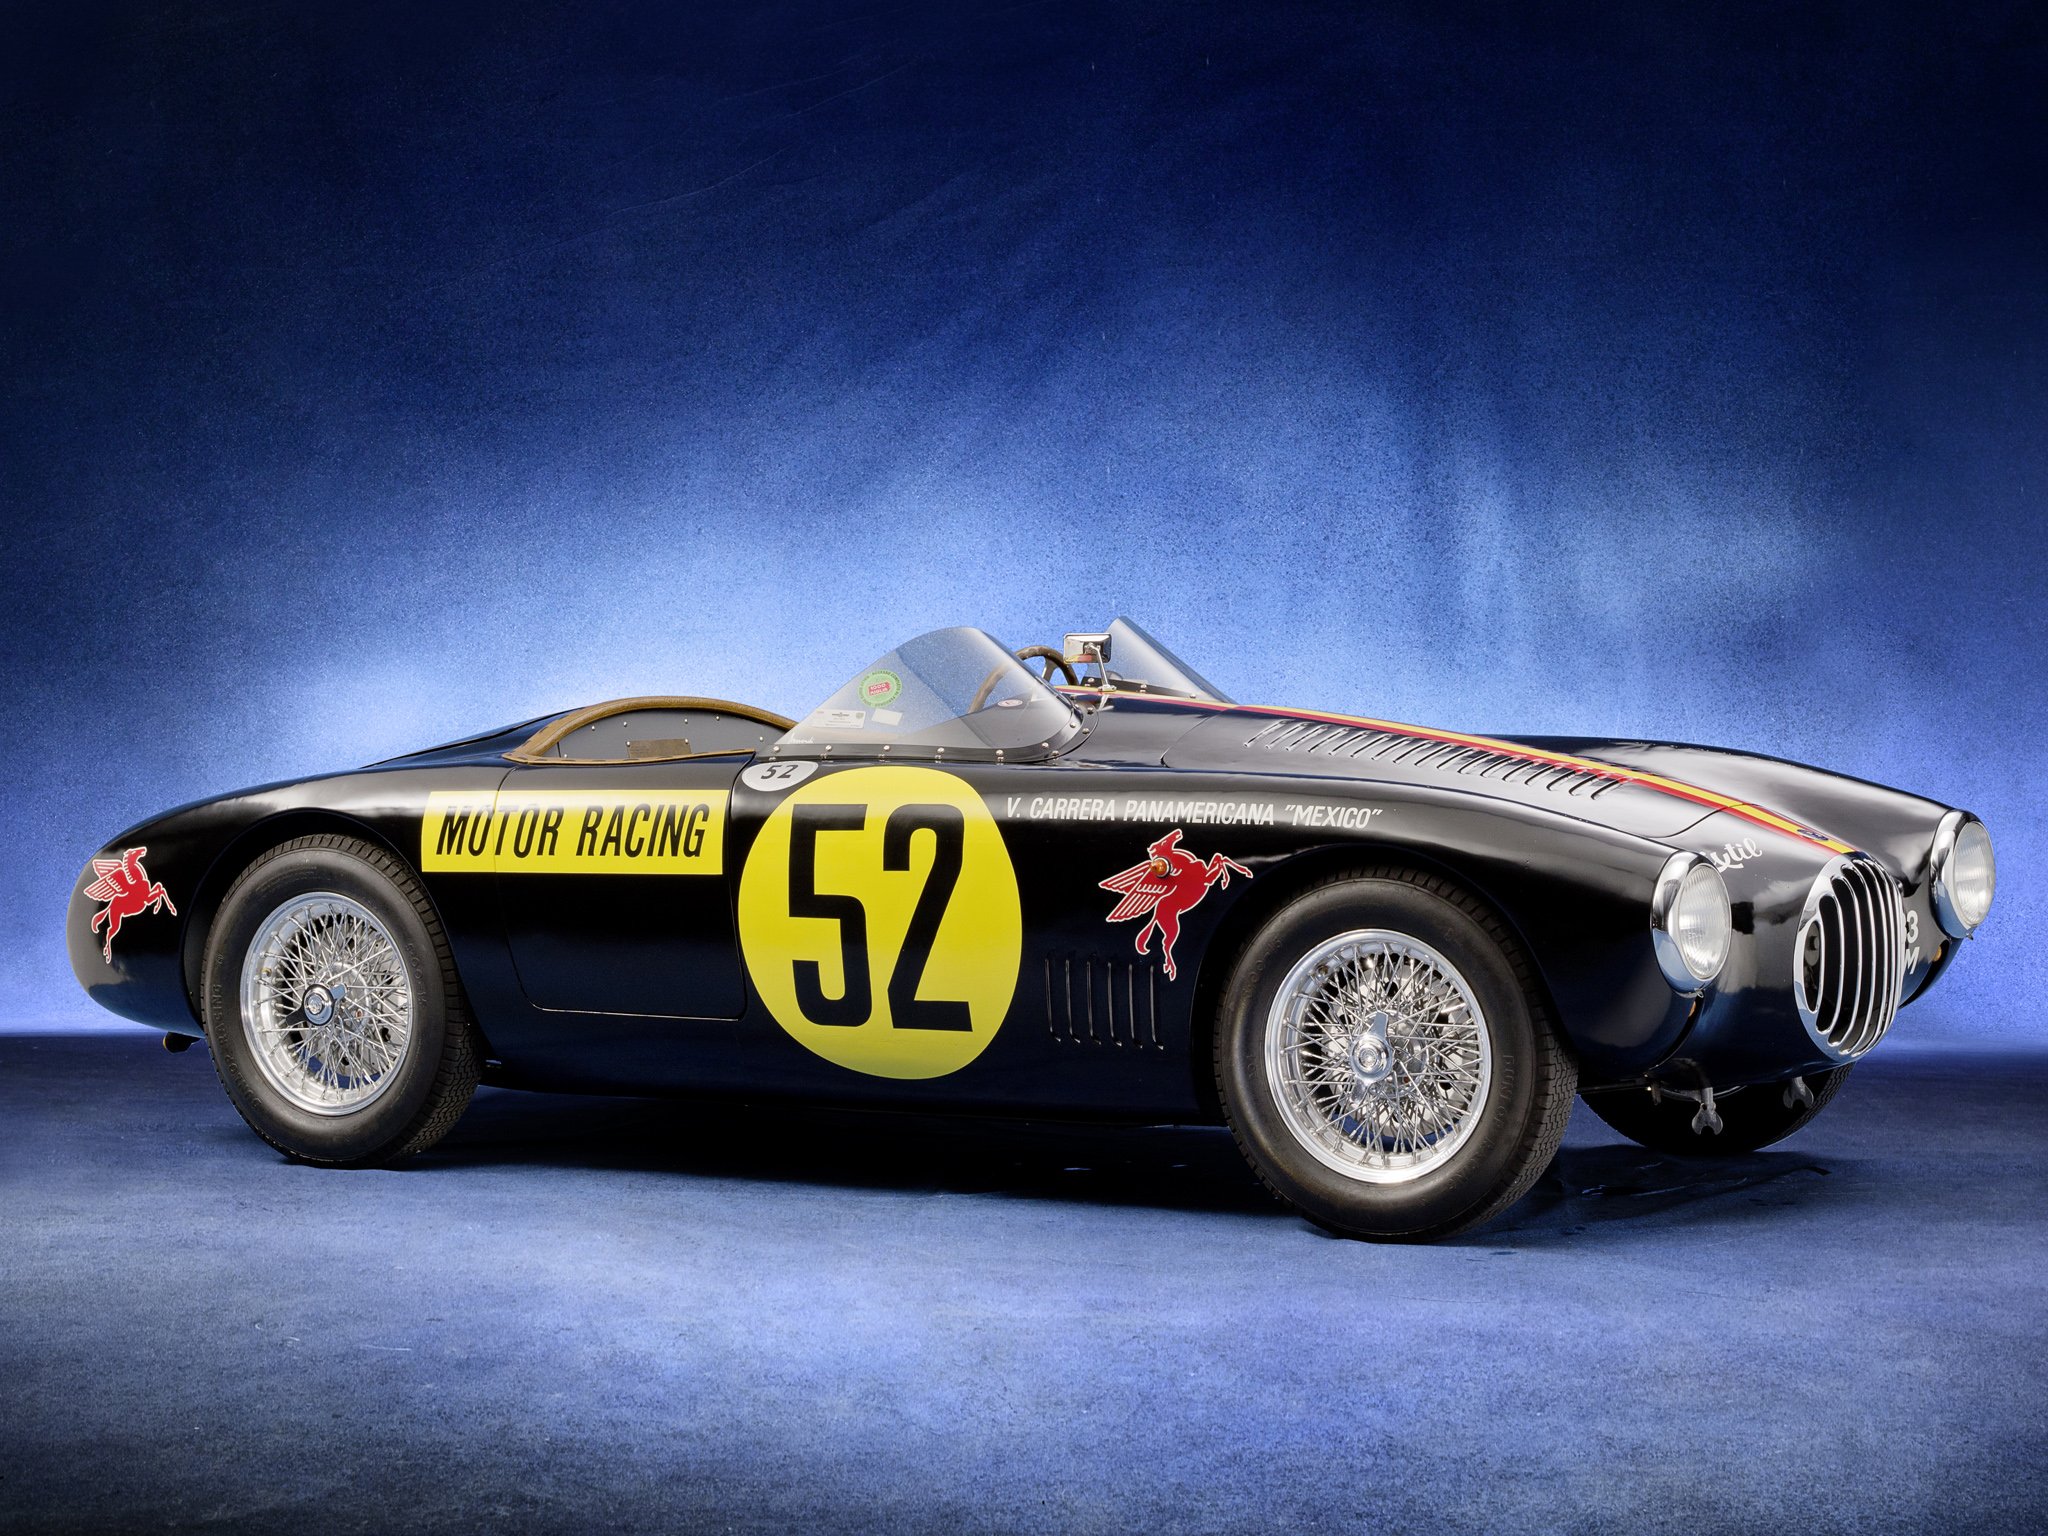 1953, Osca, Mt4, 2ad, 1500, Morelli, Spider, Race, Racing, Vintage, Retro Wallpaper